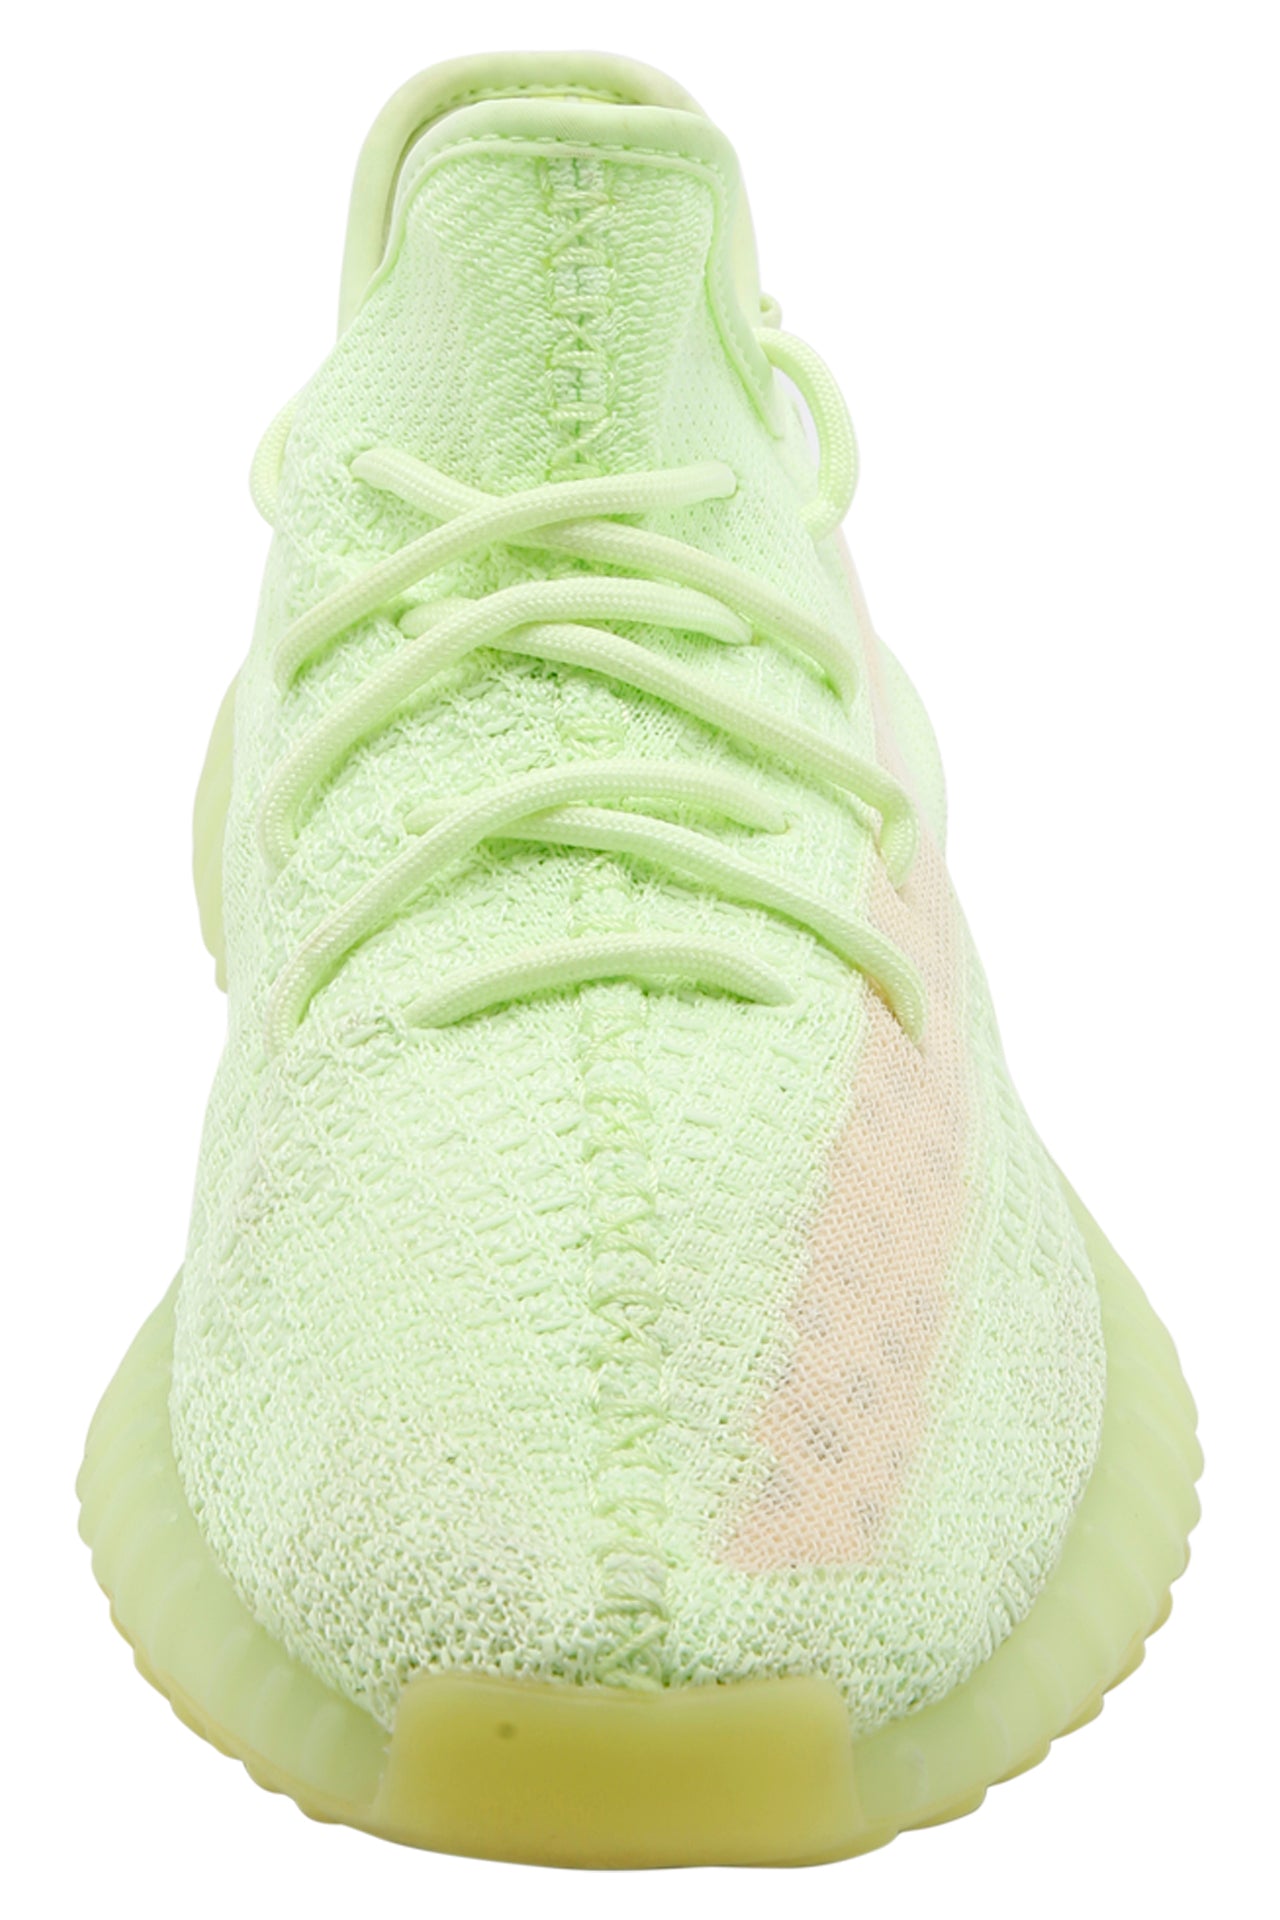 Yeezy X Adidas Boost Sneakers Green Size EU 44.5